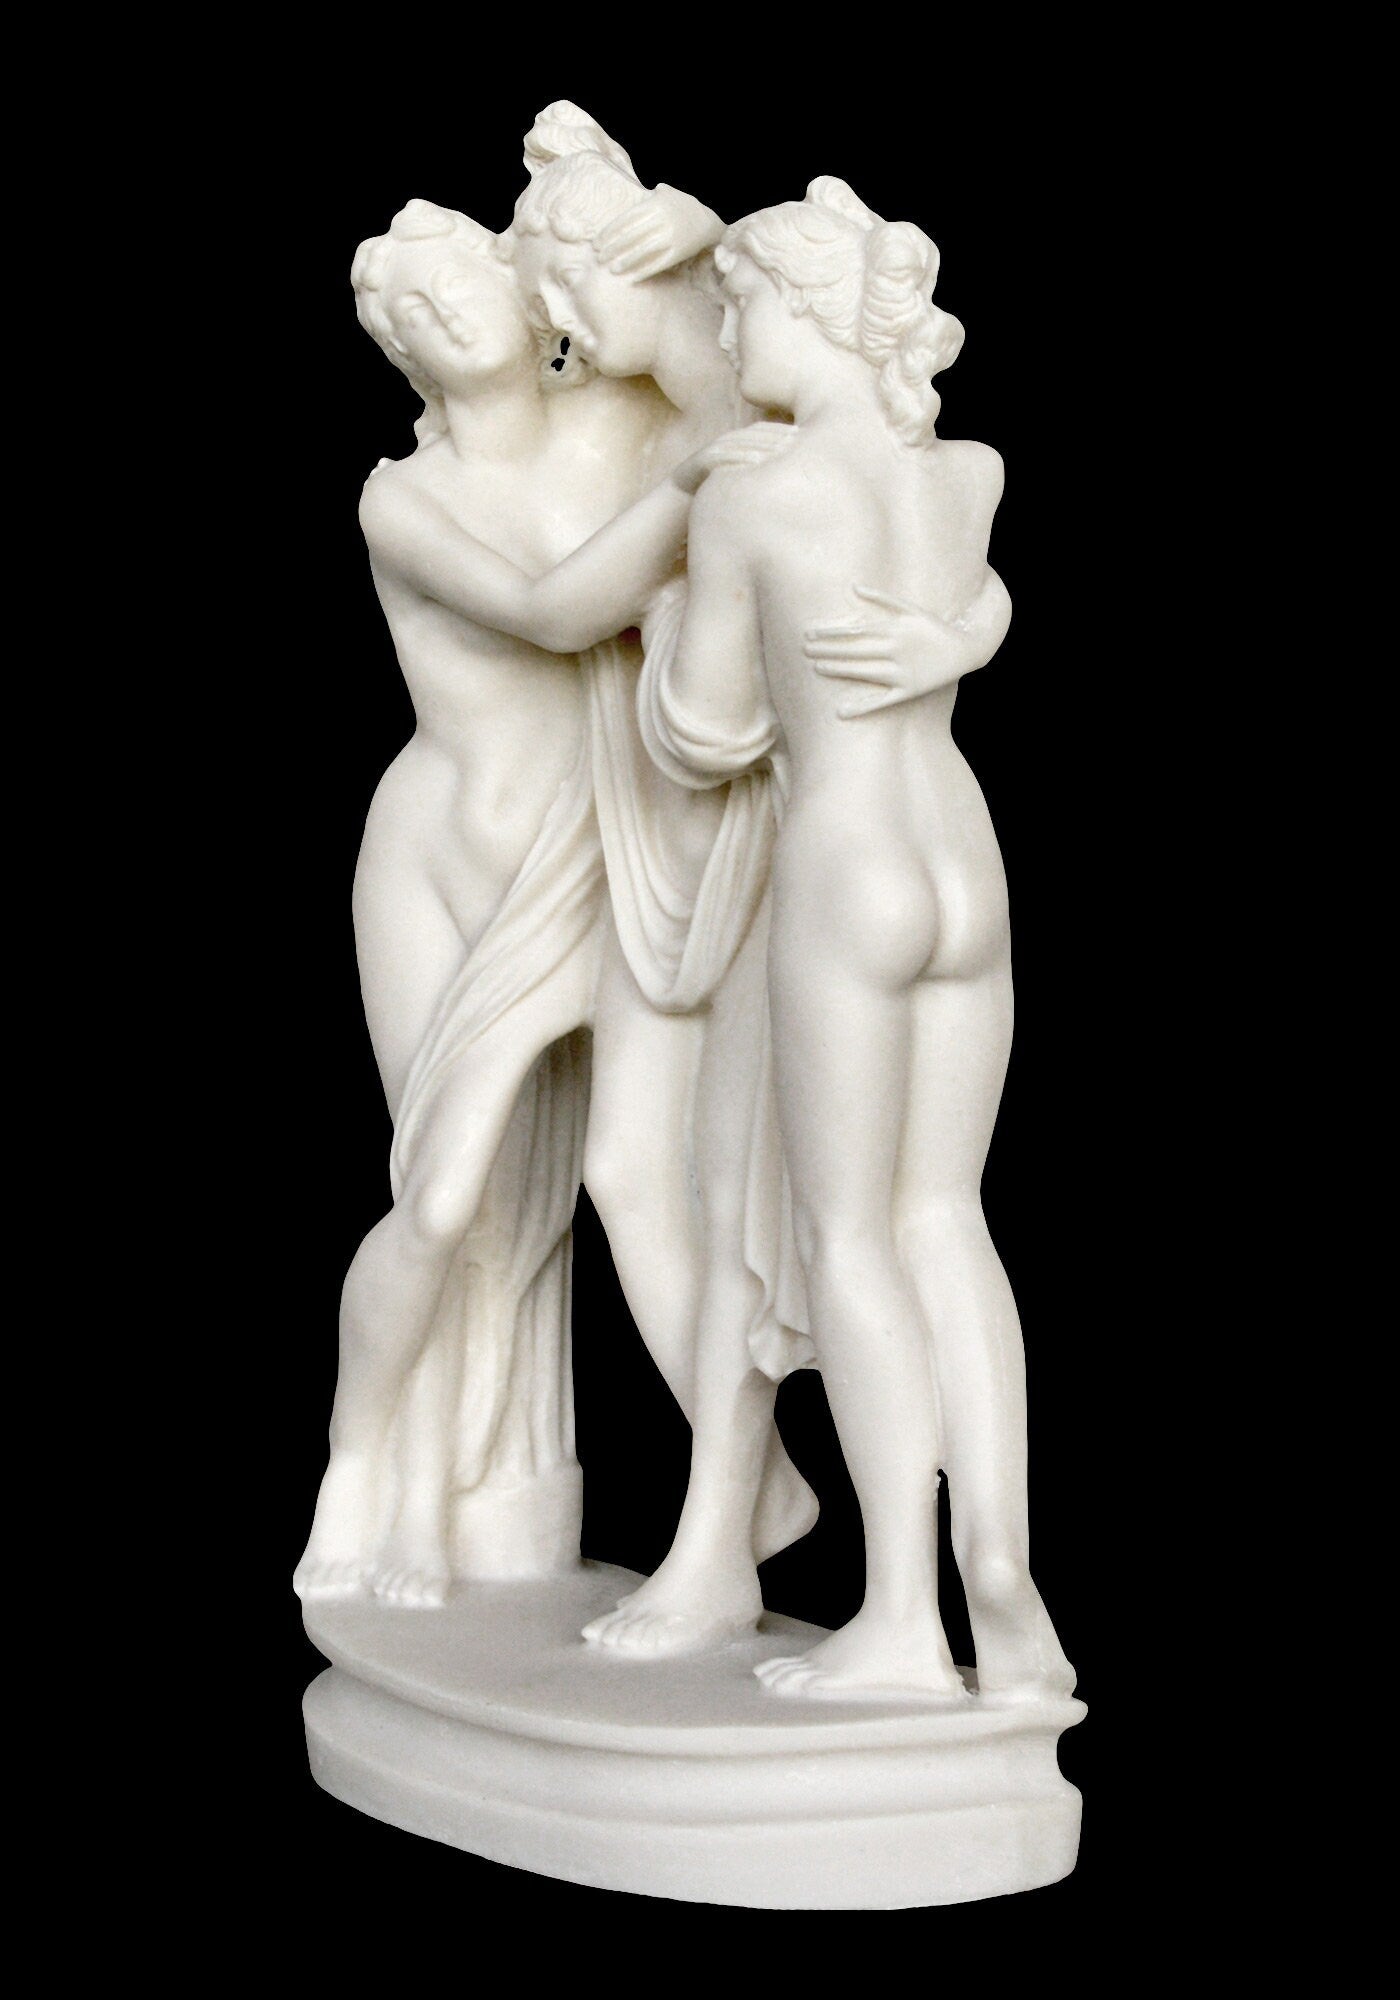 Three Graces Gratiae  - Euphrosyne, Aglaia, and Thalia - Greek Roman Goddesses of Pleasure, Creativity  - Alabaster  Sculpture